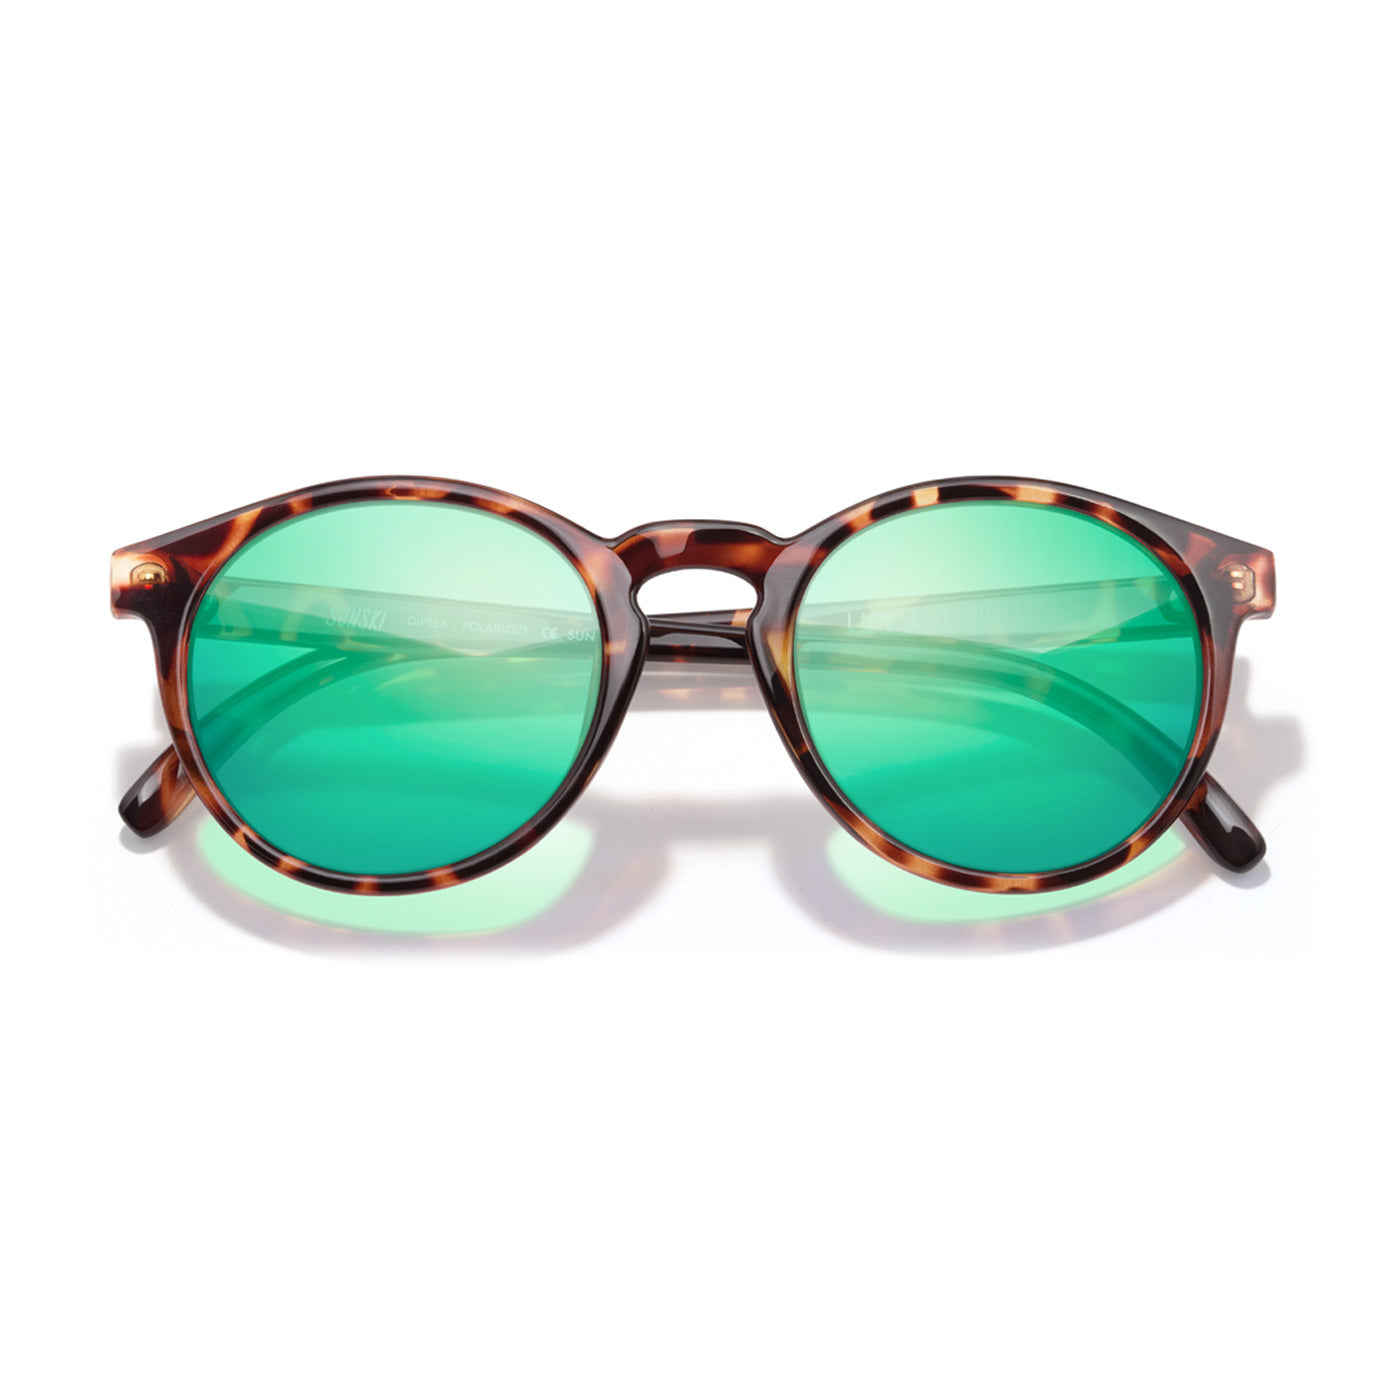 Dipsea Tortoise with aqua lenses sunglasses by Sunski